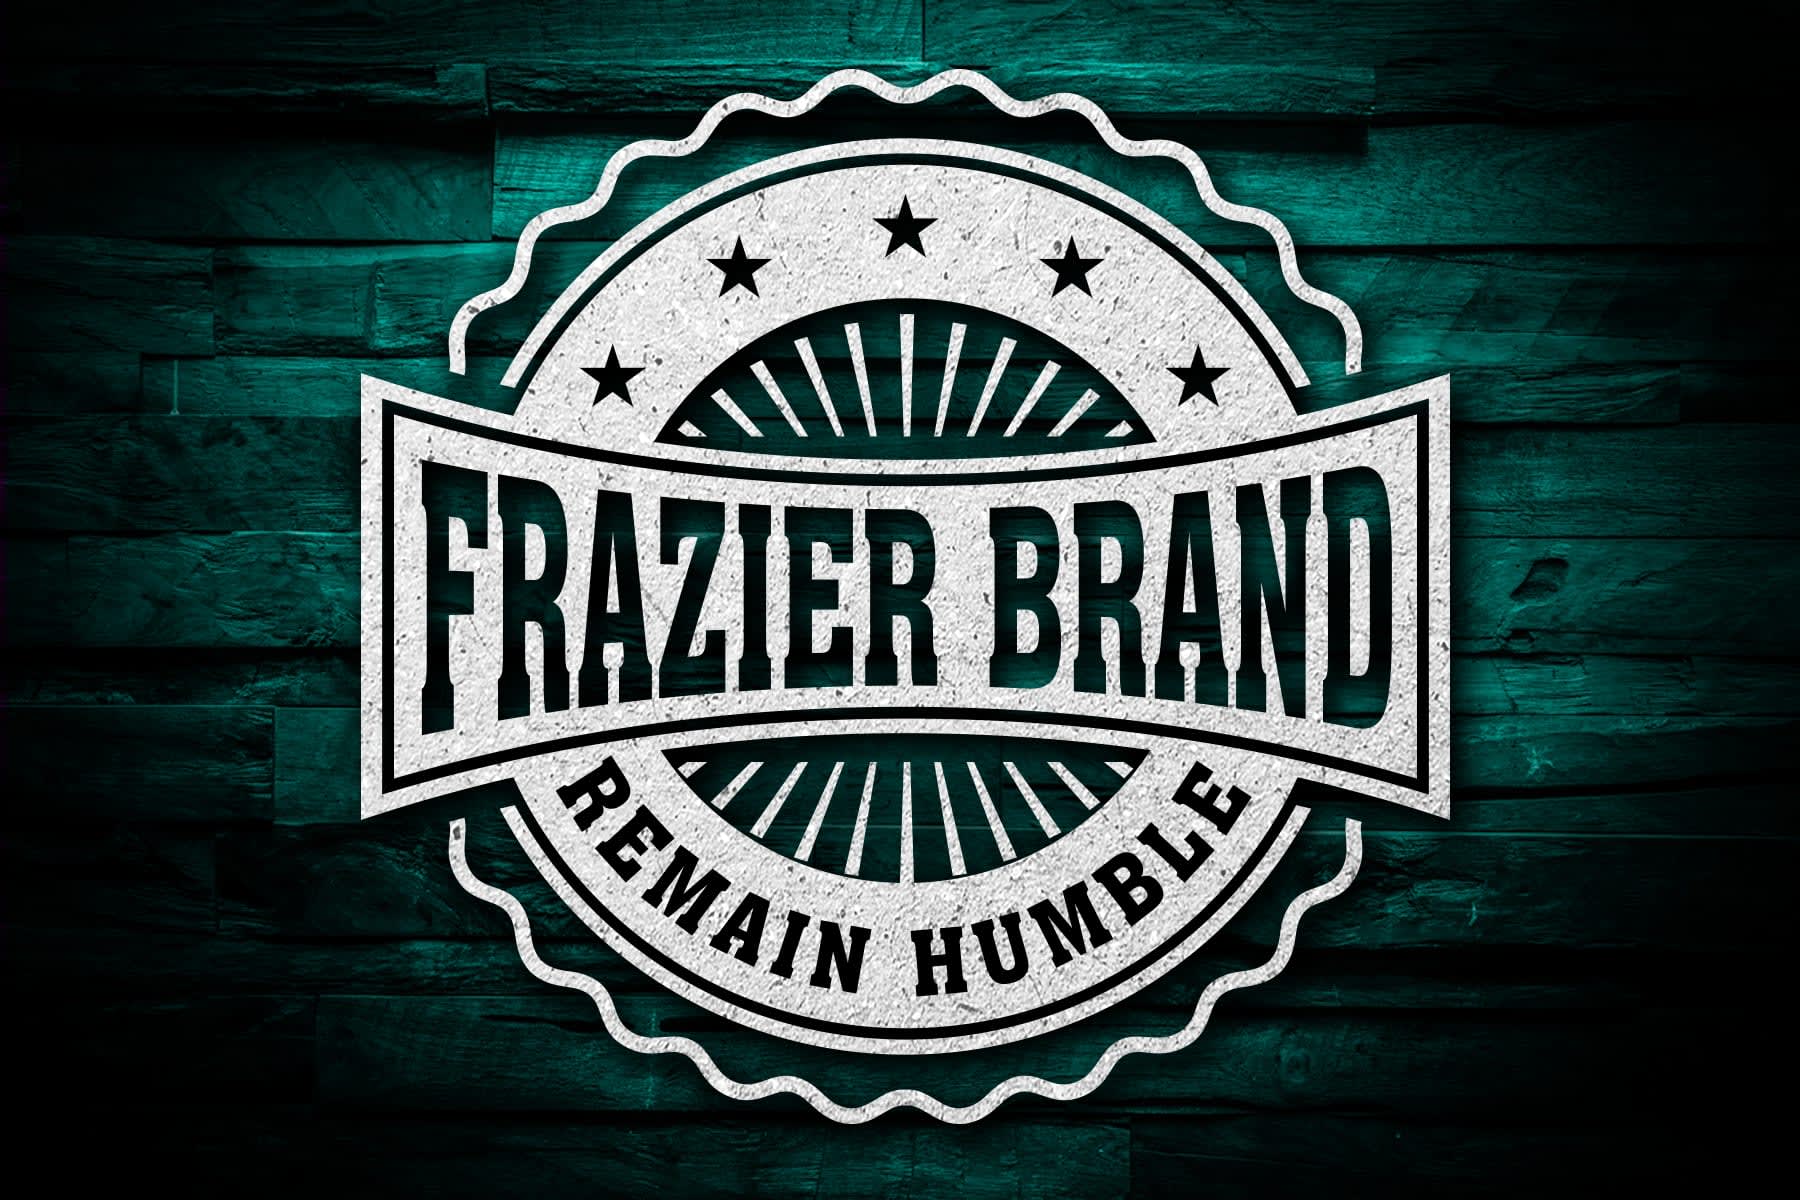 The Frazier Brand